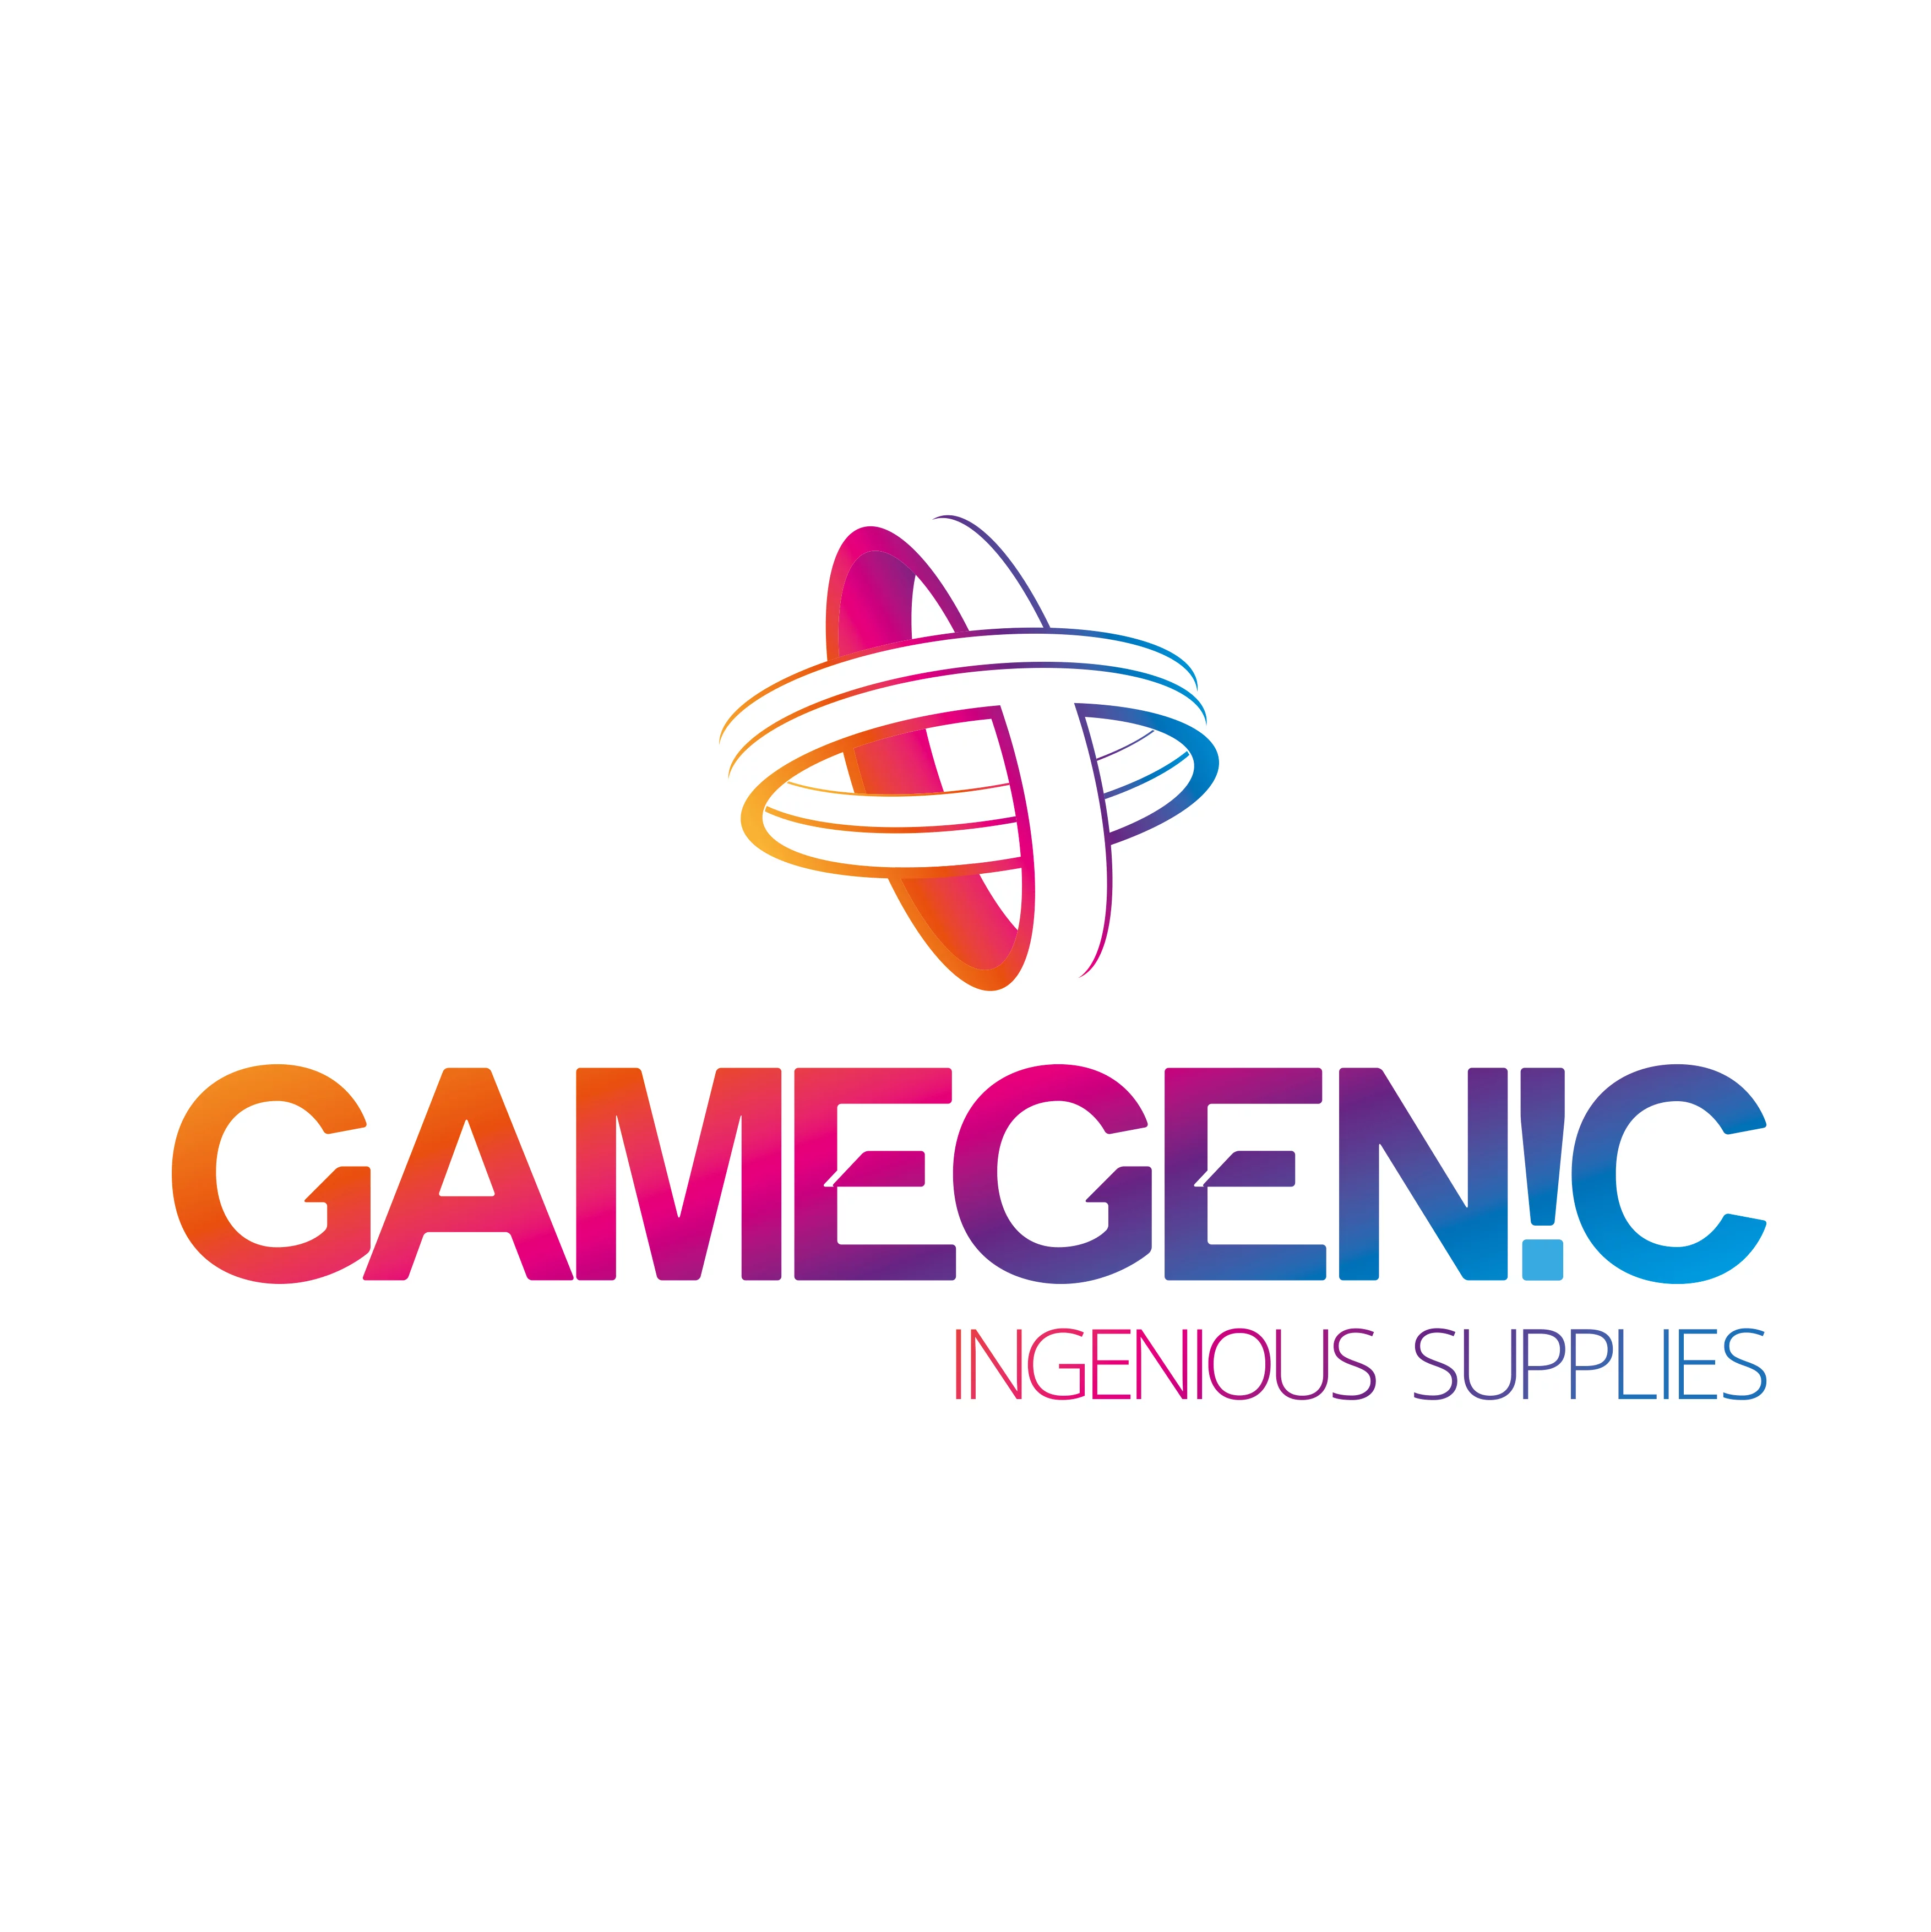 Gamegenic supplies